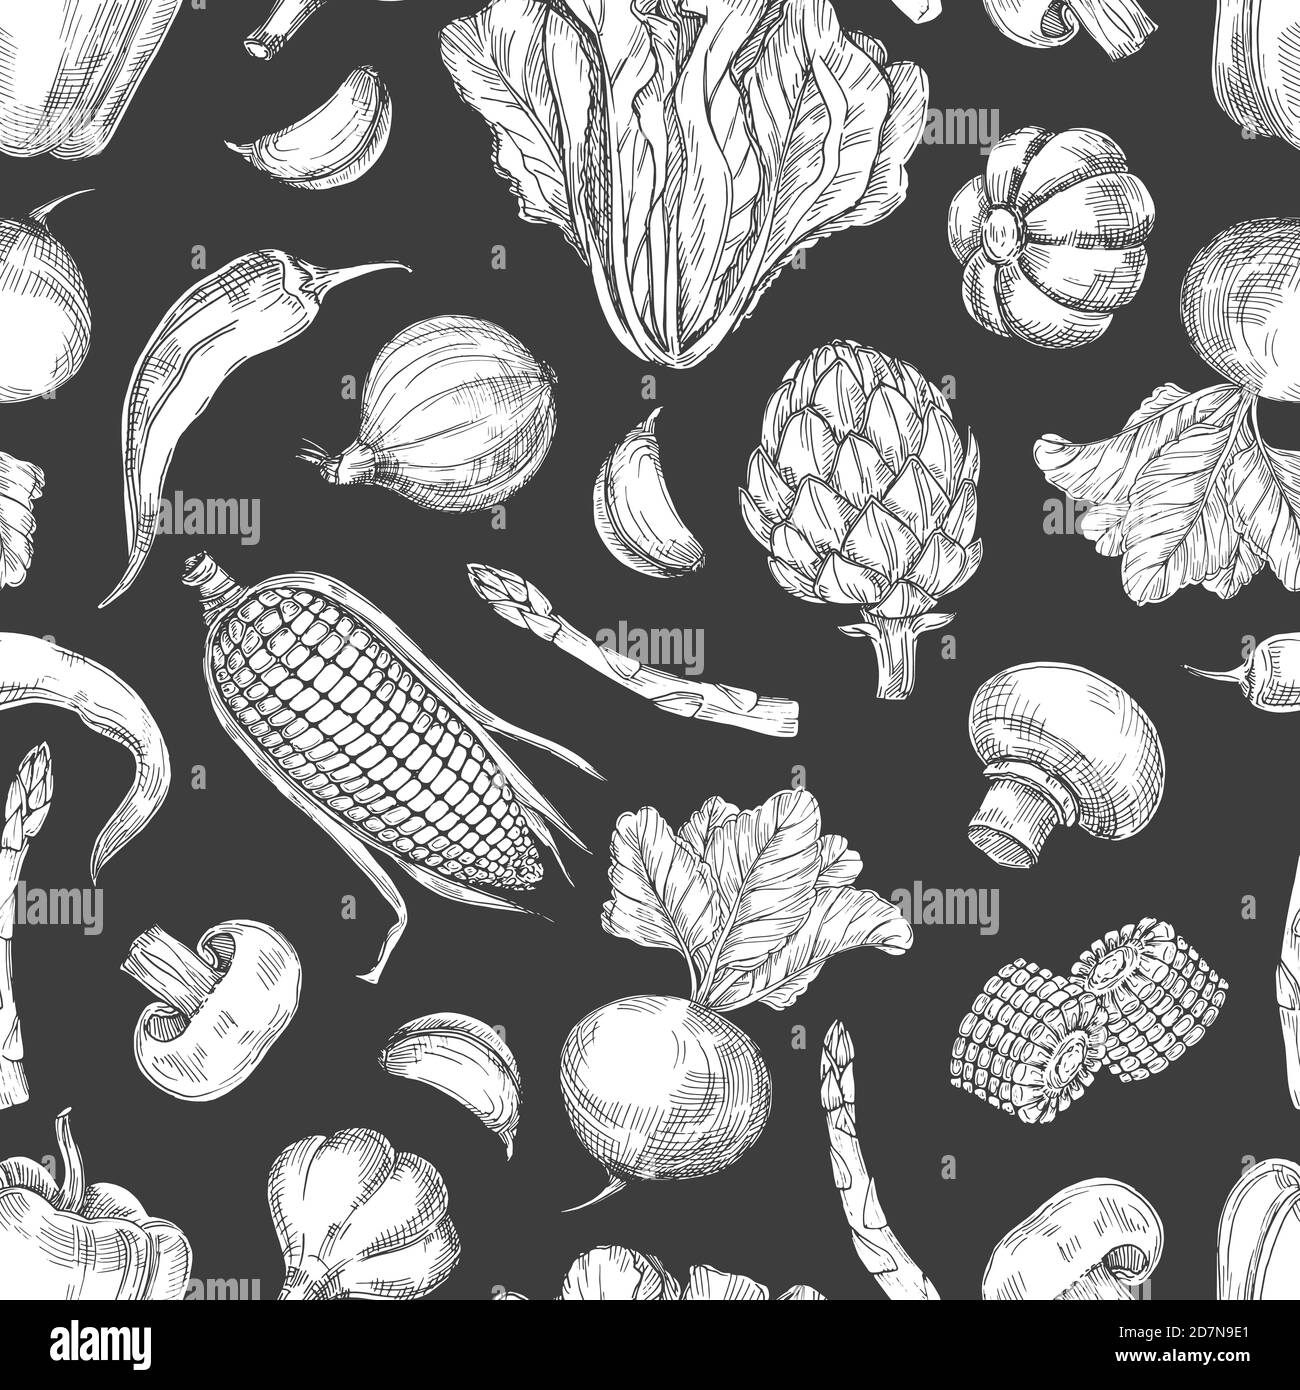 Hand drawn vegetables vintage seamless pattern background. Food vegetarian sketch, fresh asparagus and cabbage illustration Stock Vector